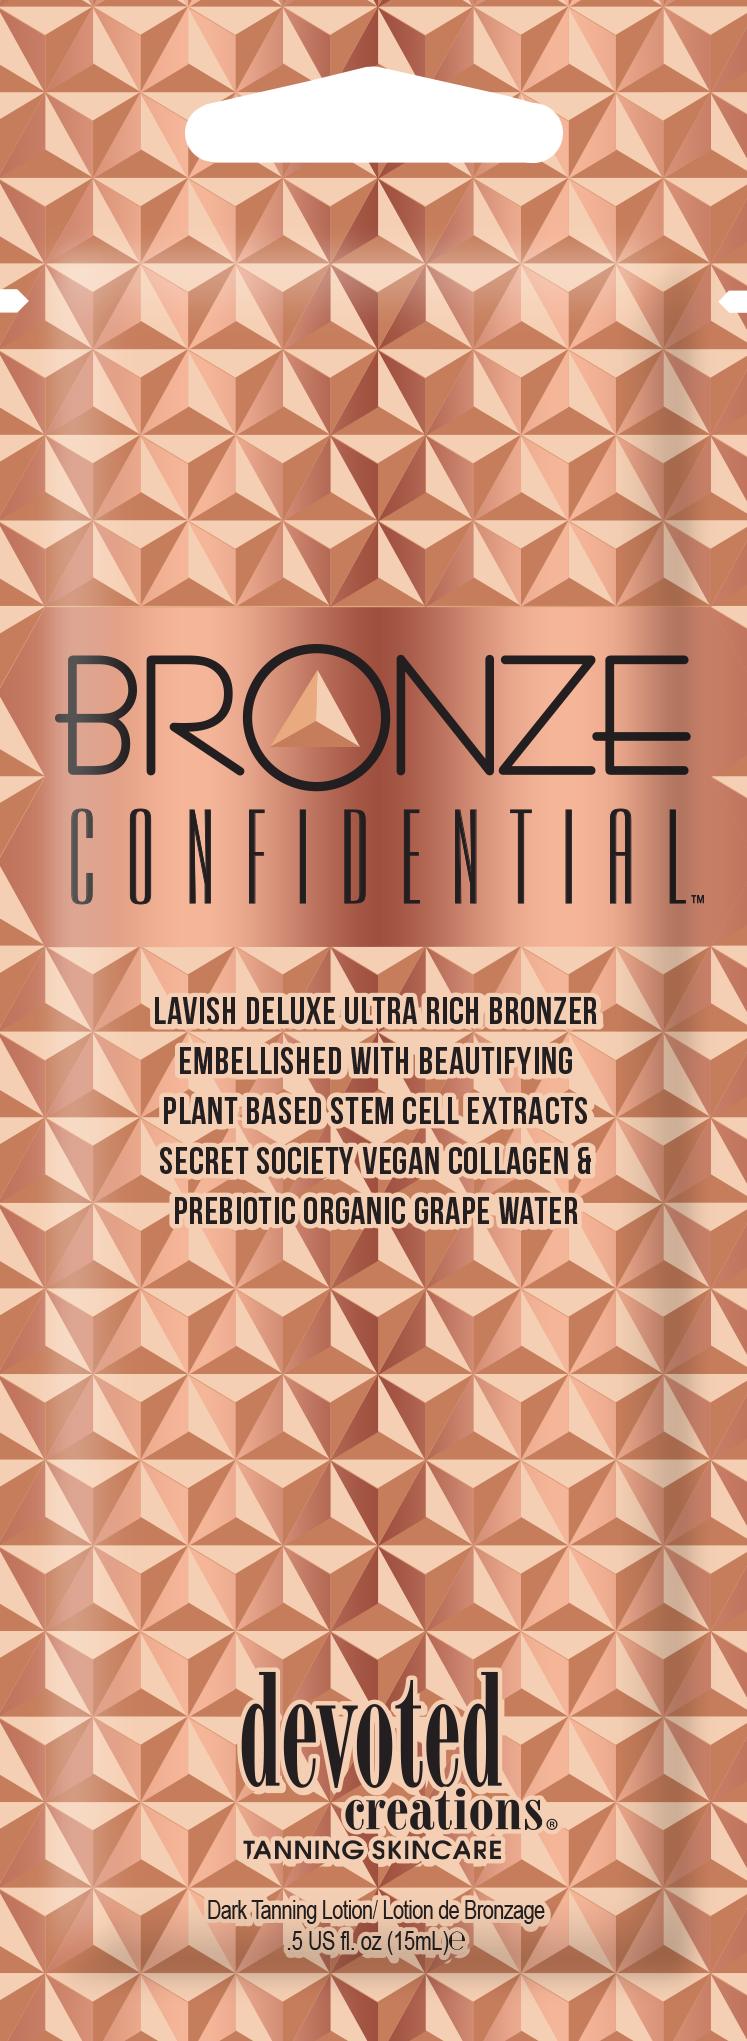 Devoted Creations | Bronze Confidential